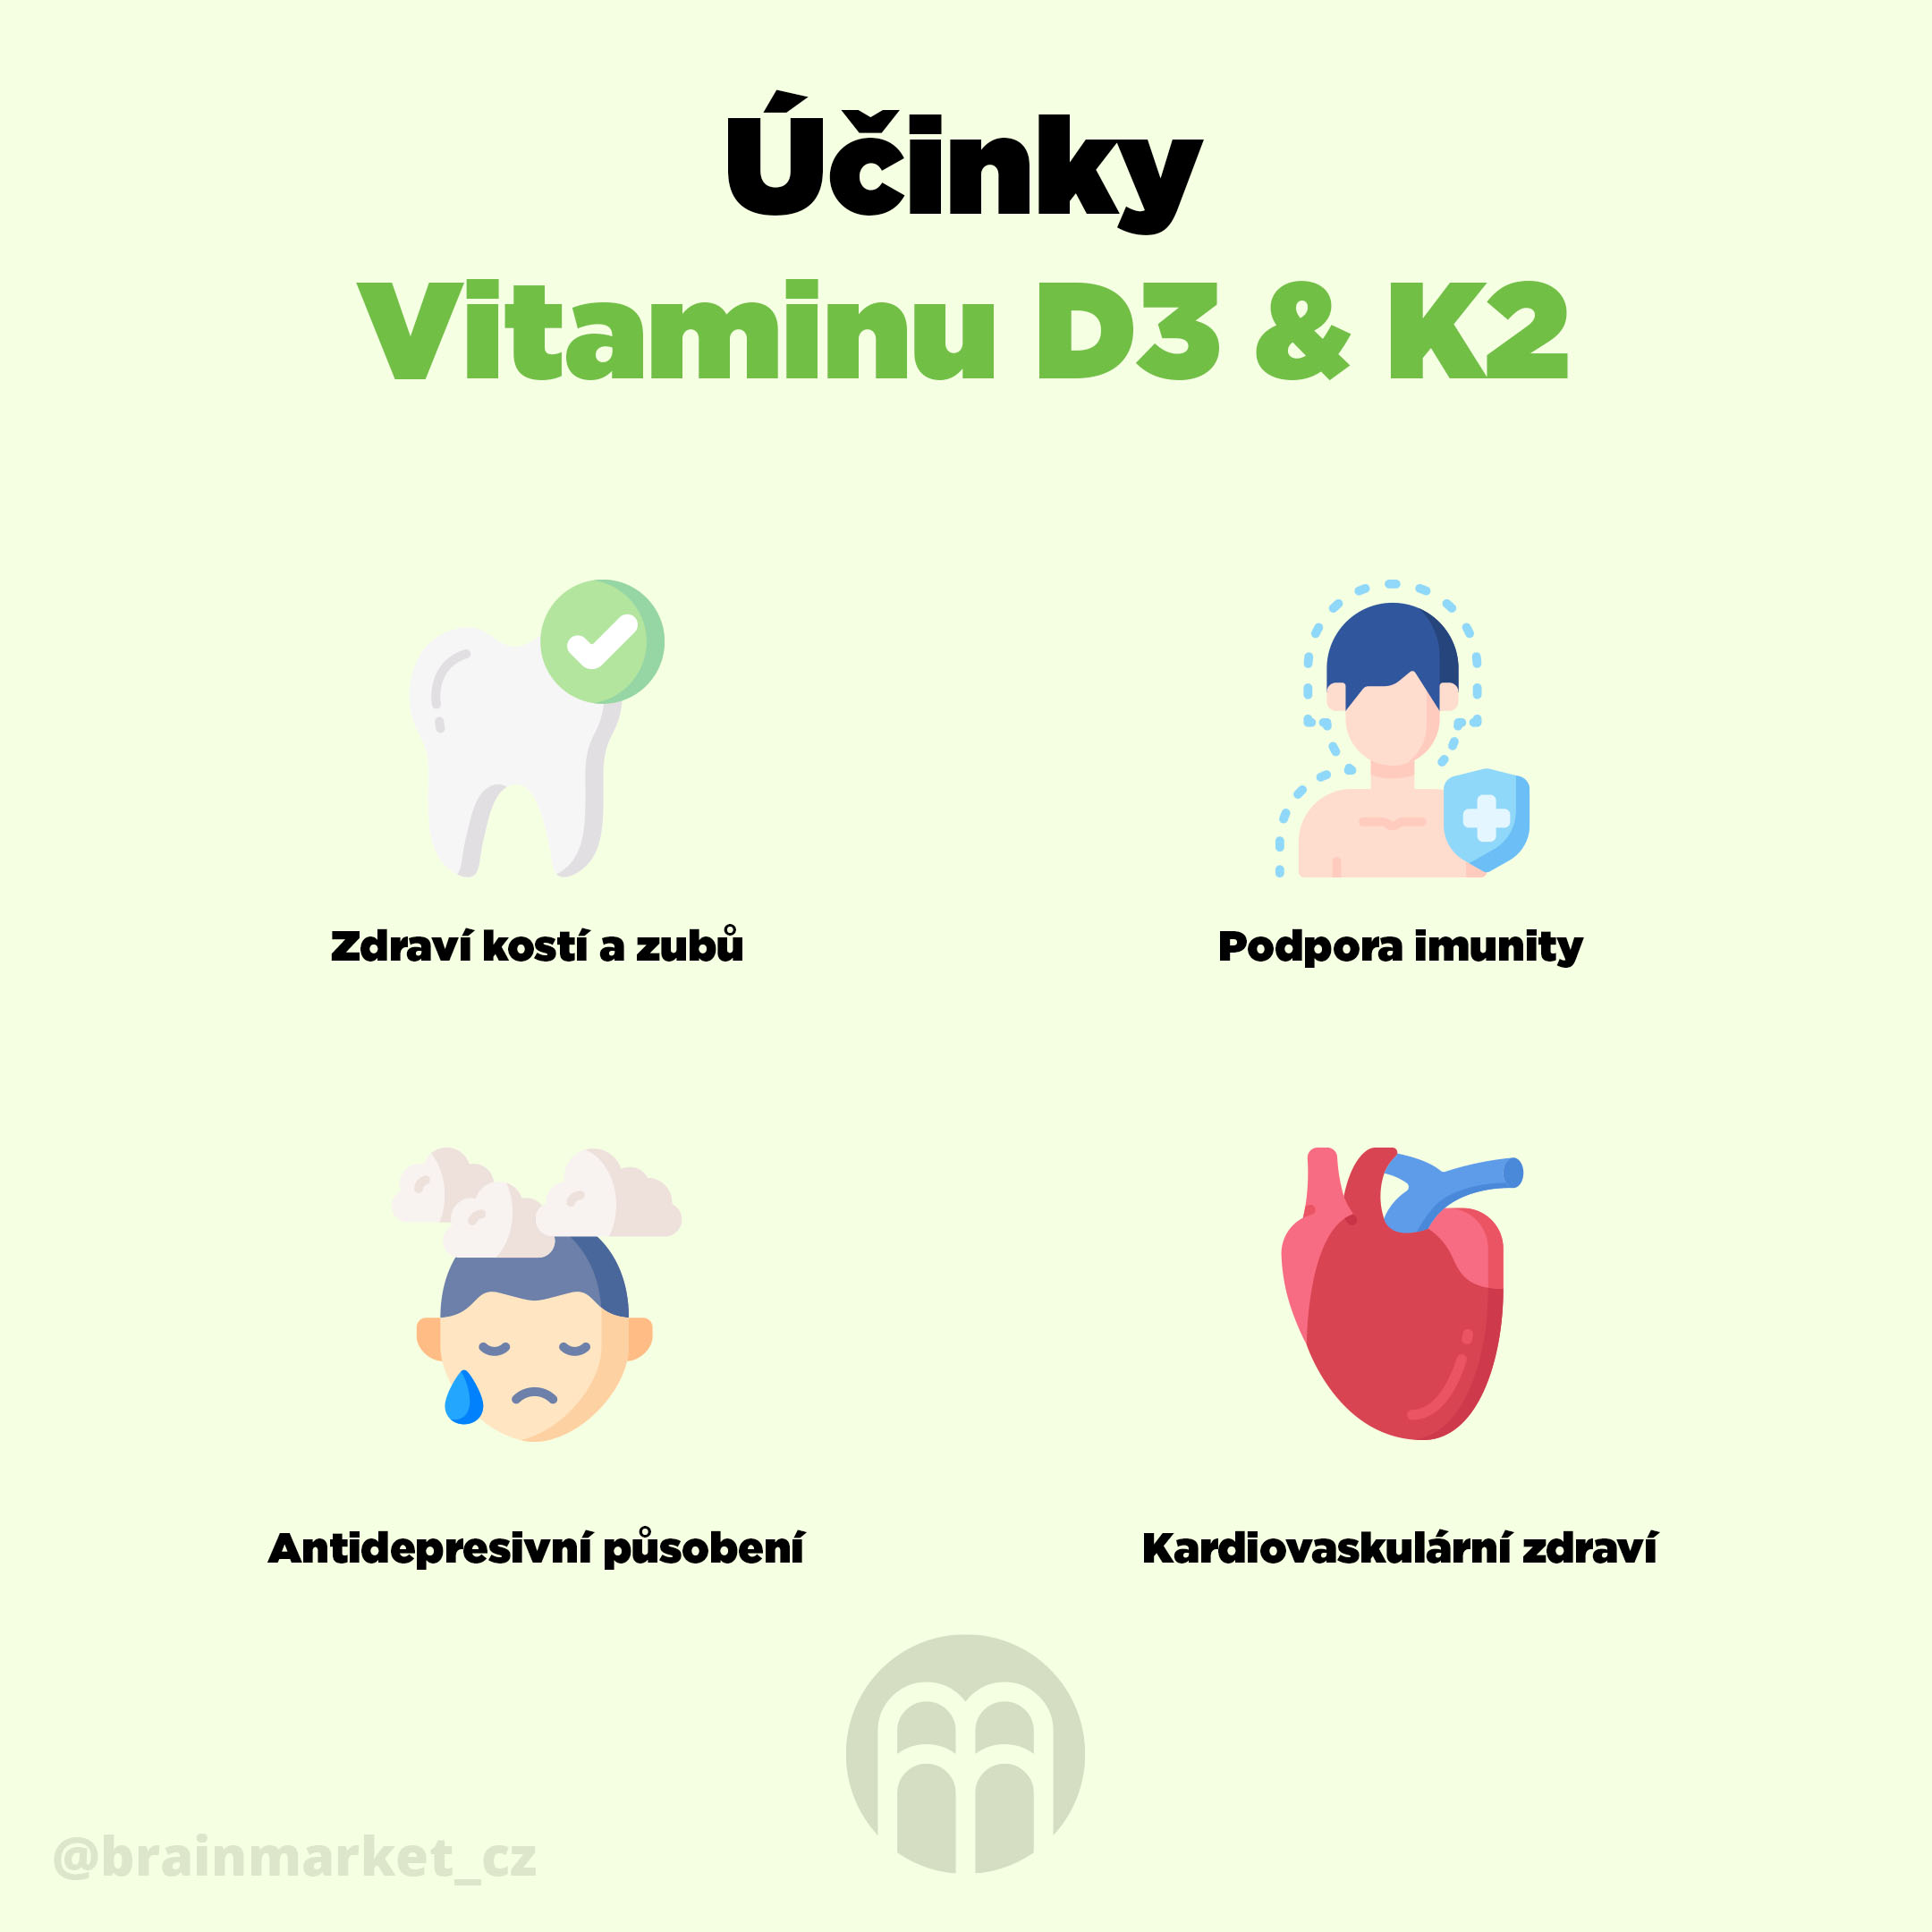 ucinky-vitaminu-d3-k2-infografika-brainmarket-cz